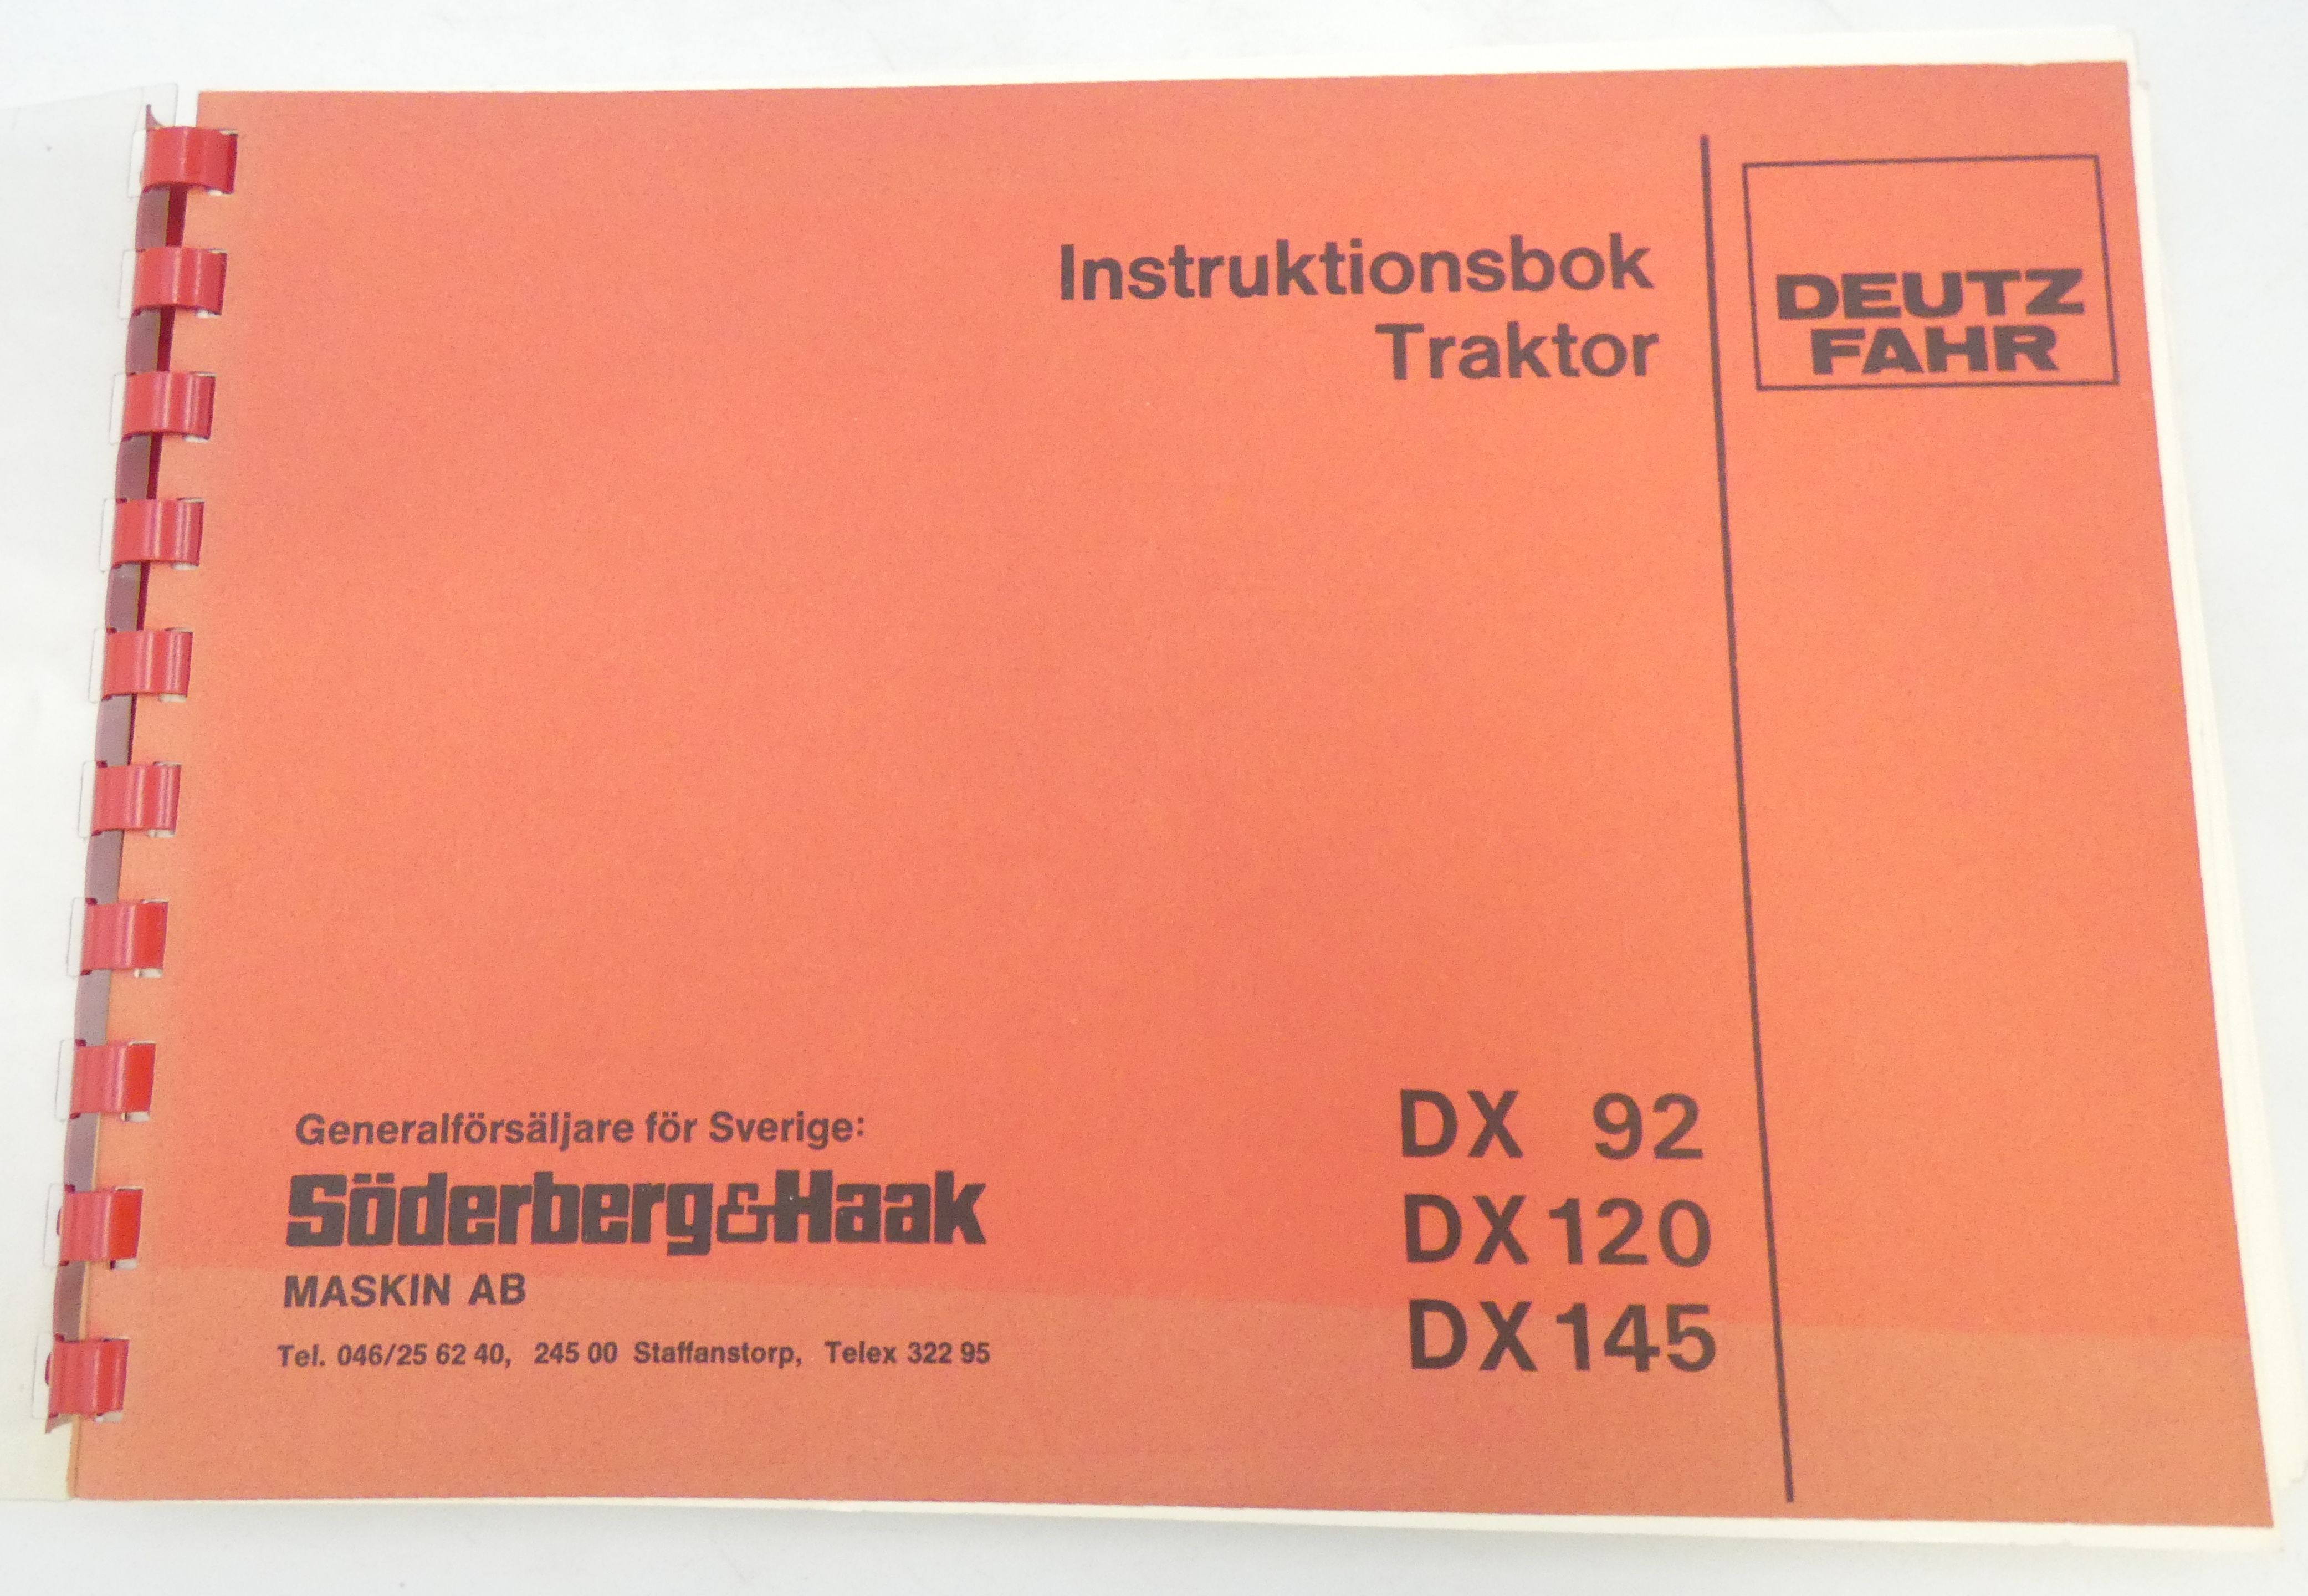 Deutz-Fahr DX92, DX120, DX145 traktor instruktionsbok